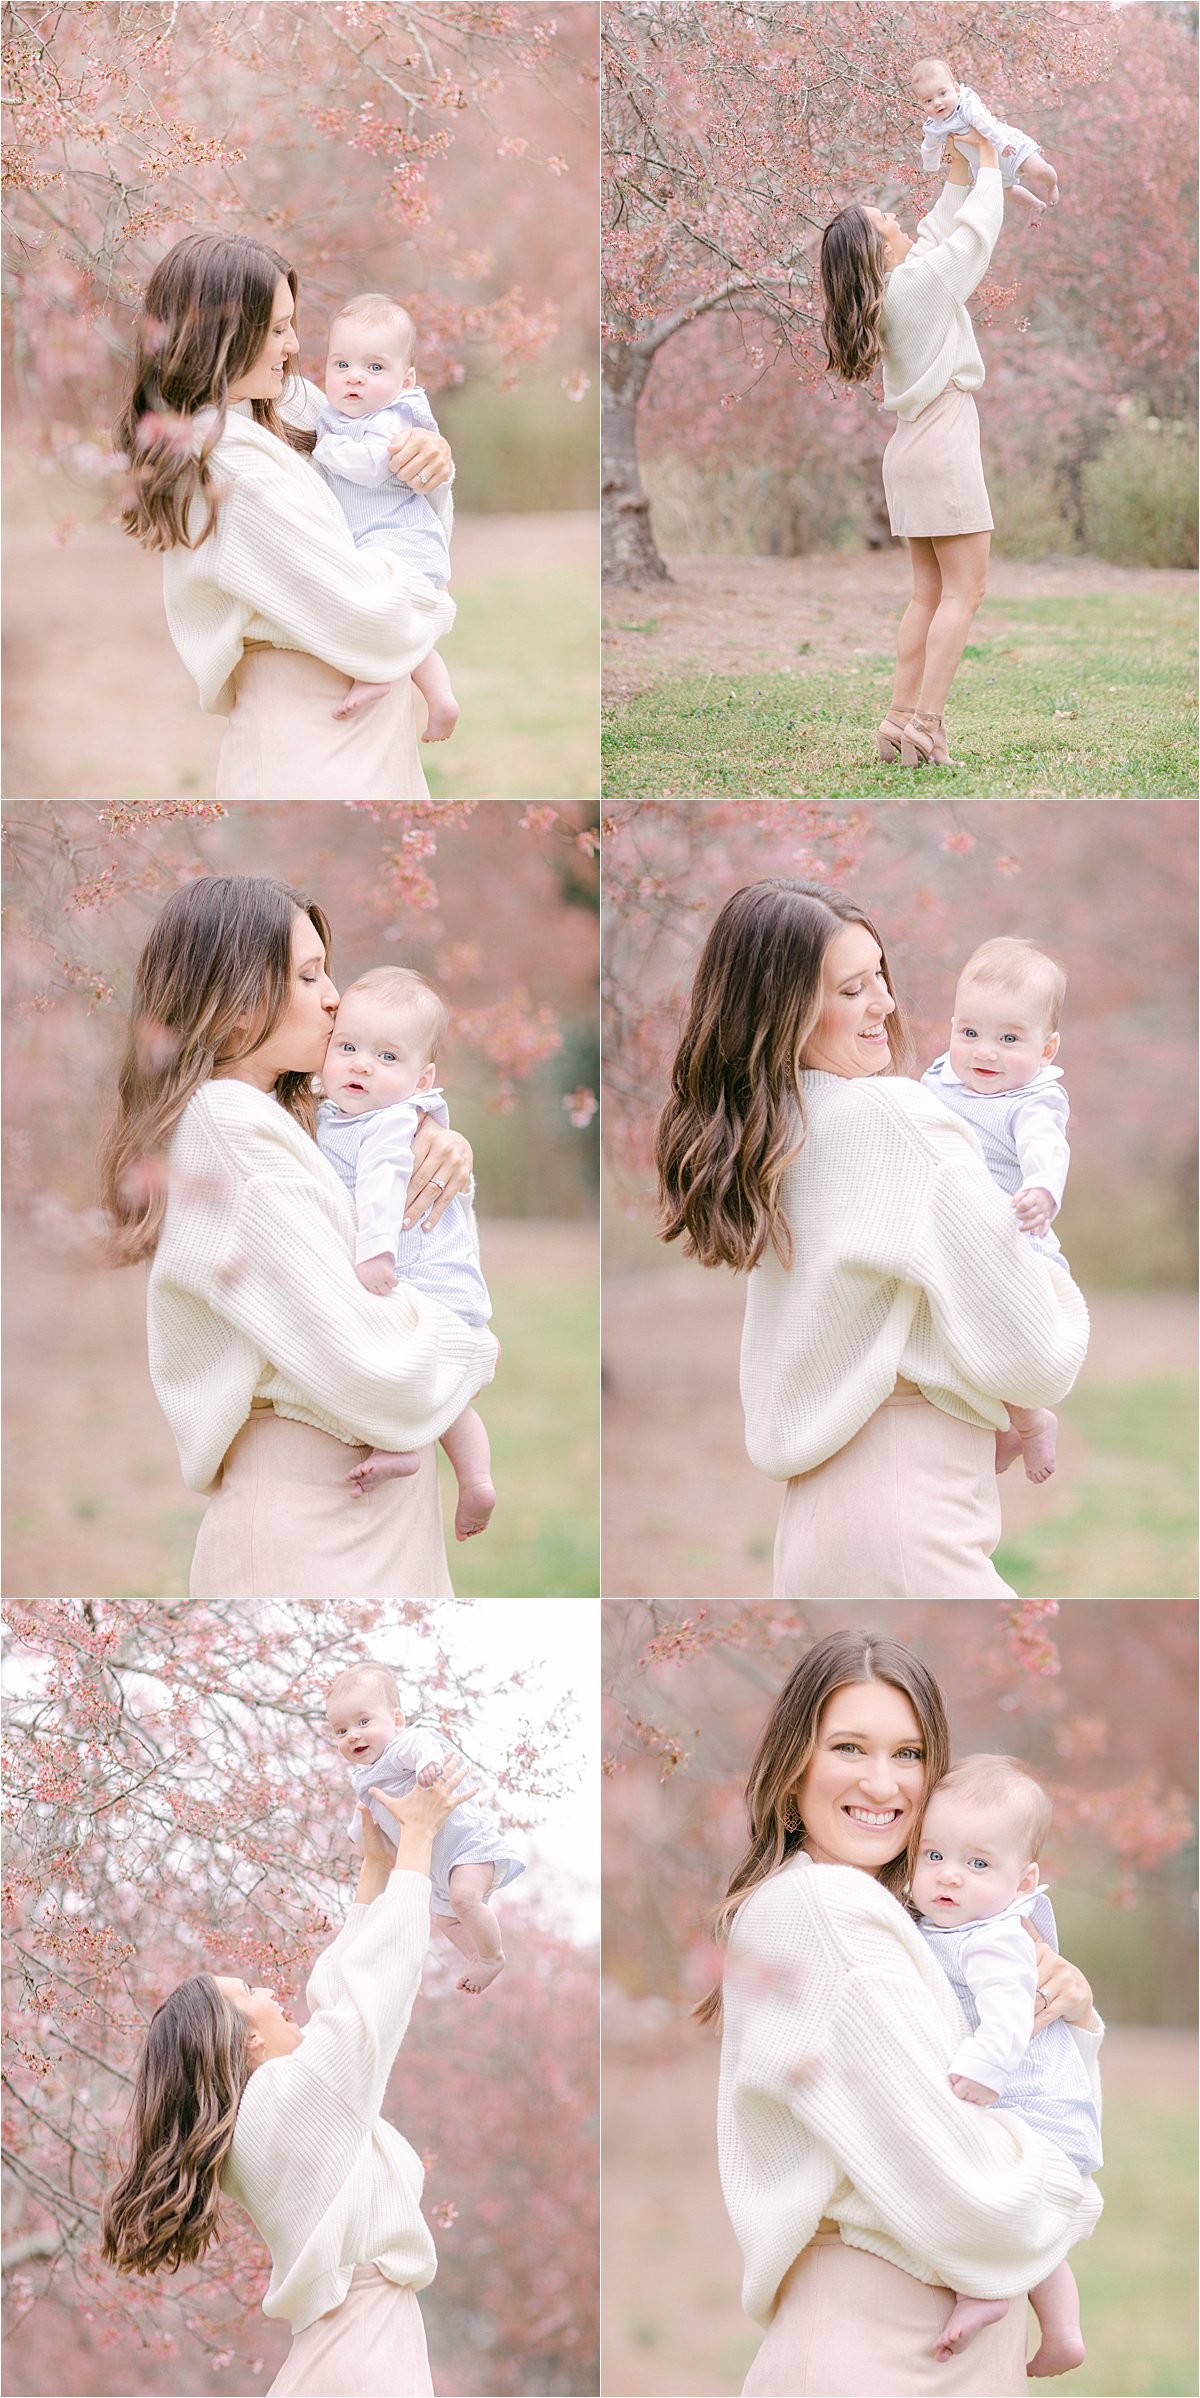 Motherhood cherry tree blossom baby photos in Athens, GA.